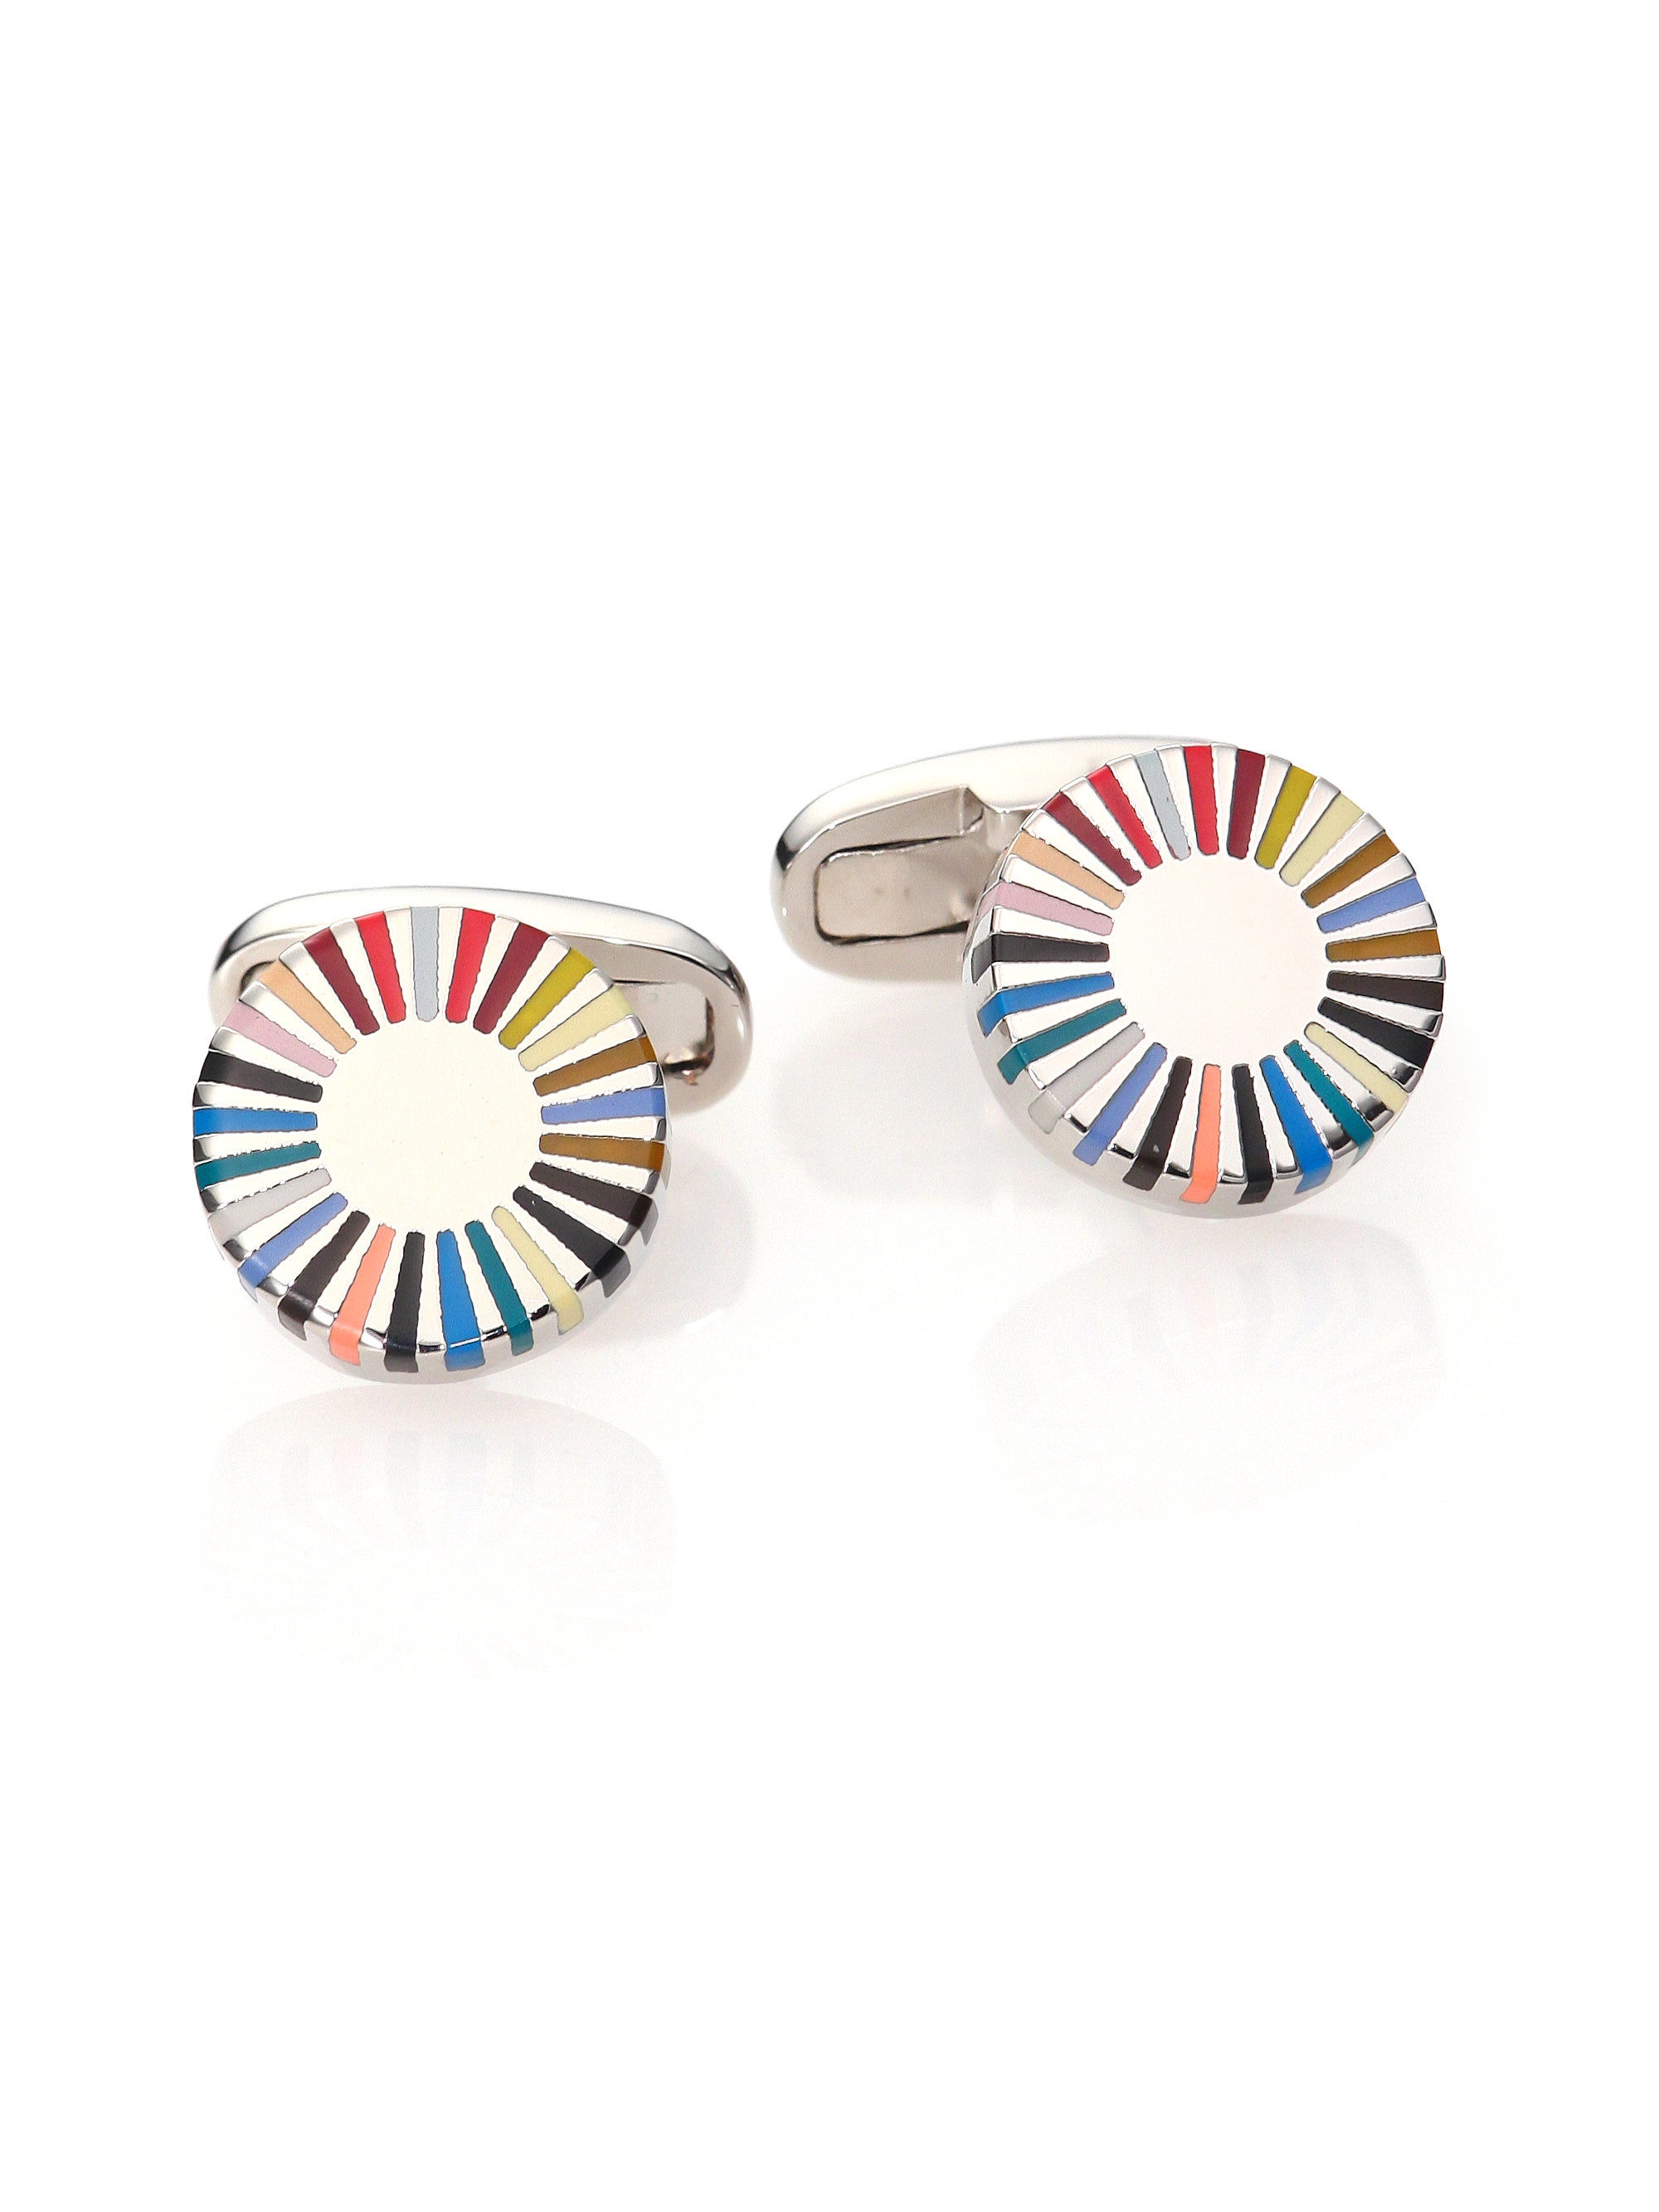 Paul smith Round Multi-color Cufflinks in Multicolor for Men | Lyst